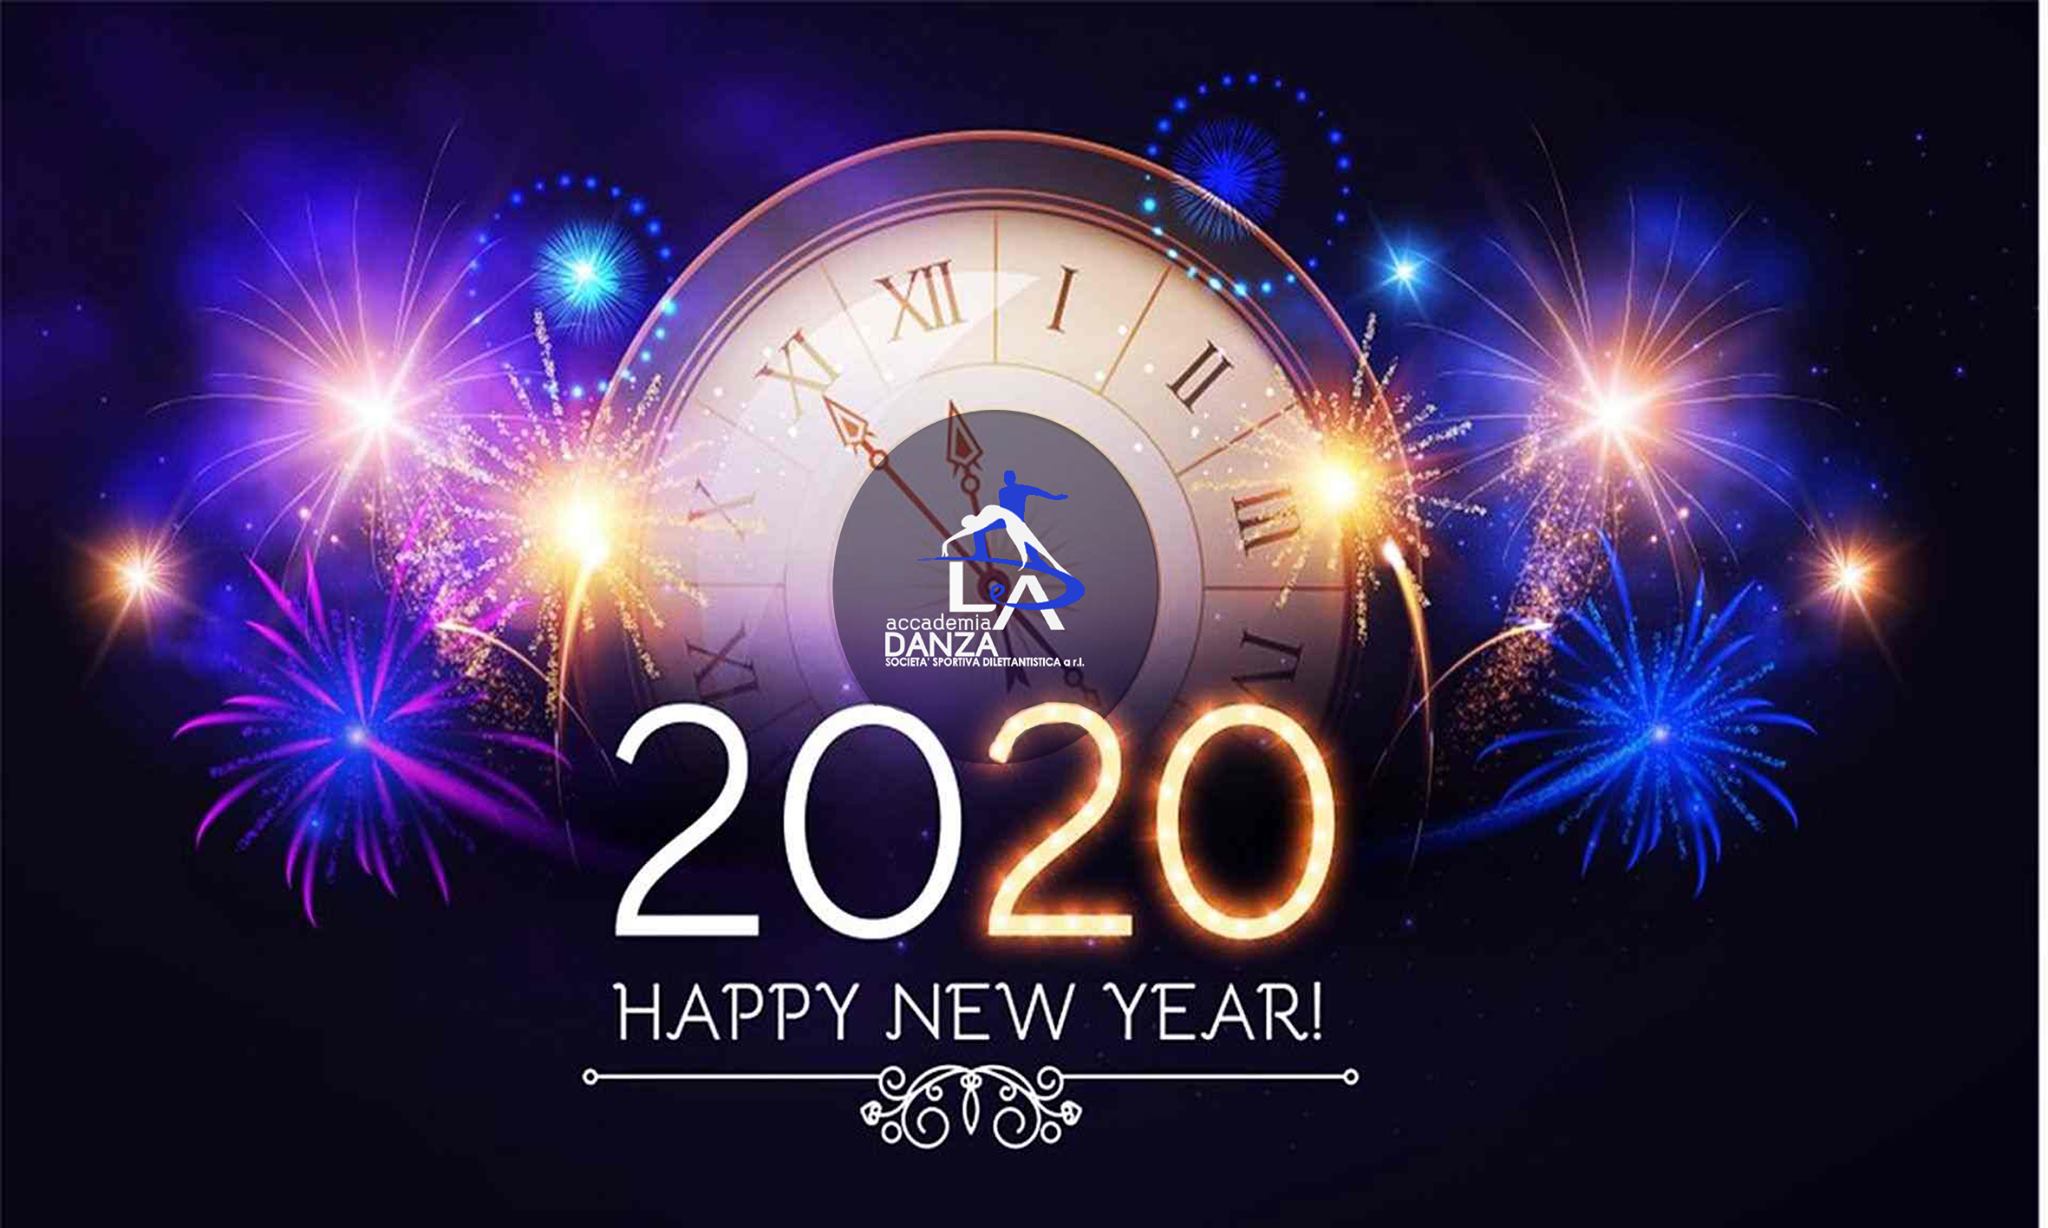 Новый год 2024 базы. Новый год 2020 год. Happy New year картинки. Happy New year 2020. C yjdsv 2020 ujjv.